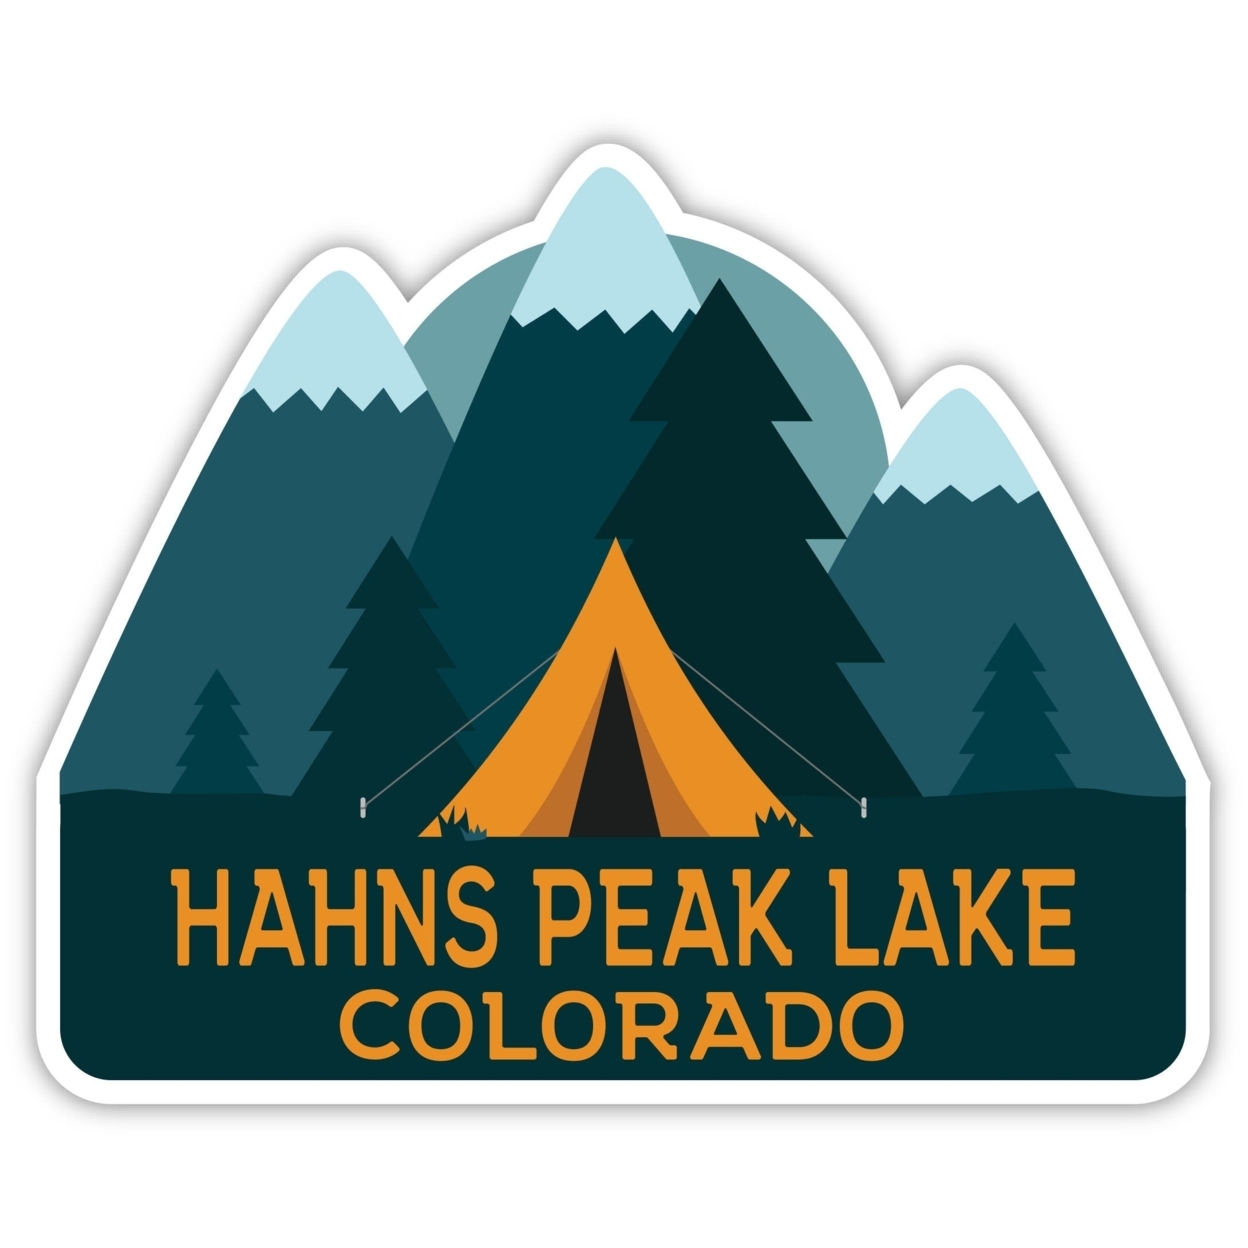 Hahns Peak Lake Colorado Souvenir Decorative Stickers (Choose Theme And Size) - Single Unit, 10-Inch, Tent